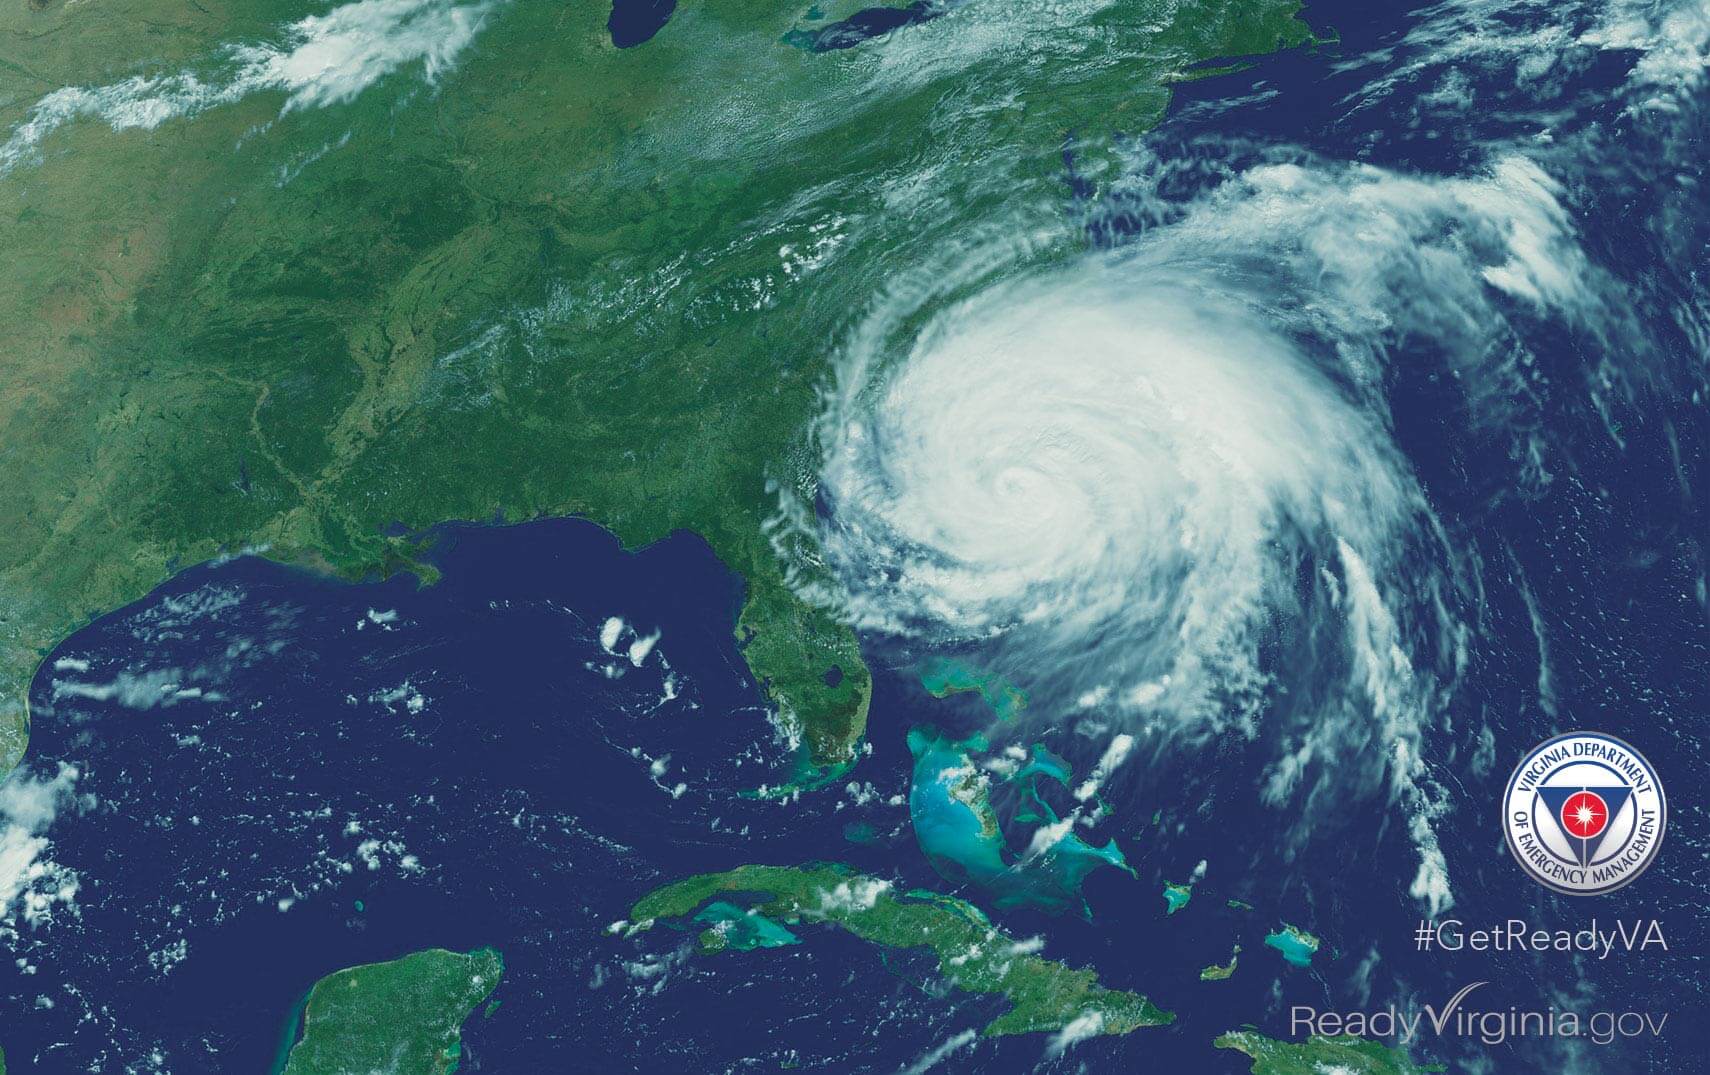 AISN Data Centers Prepared for Hurricane Florence